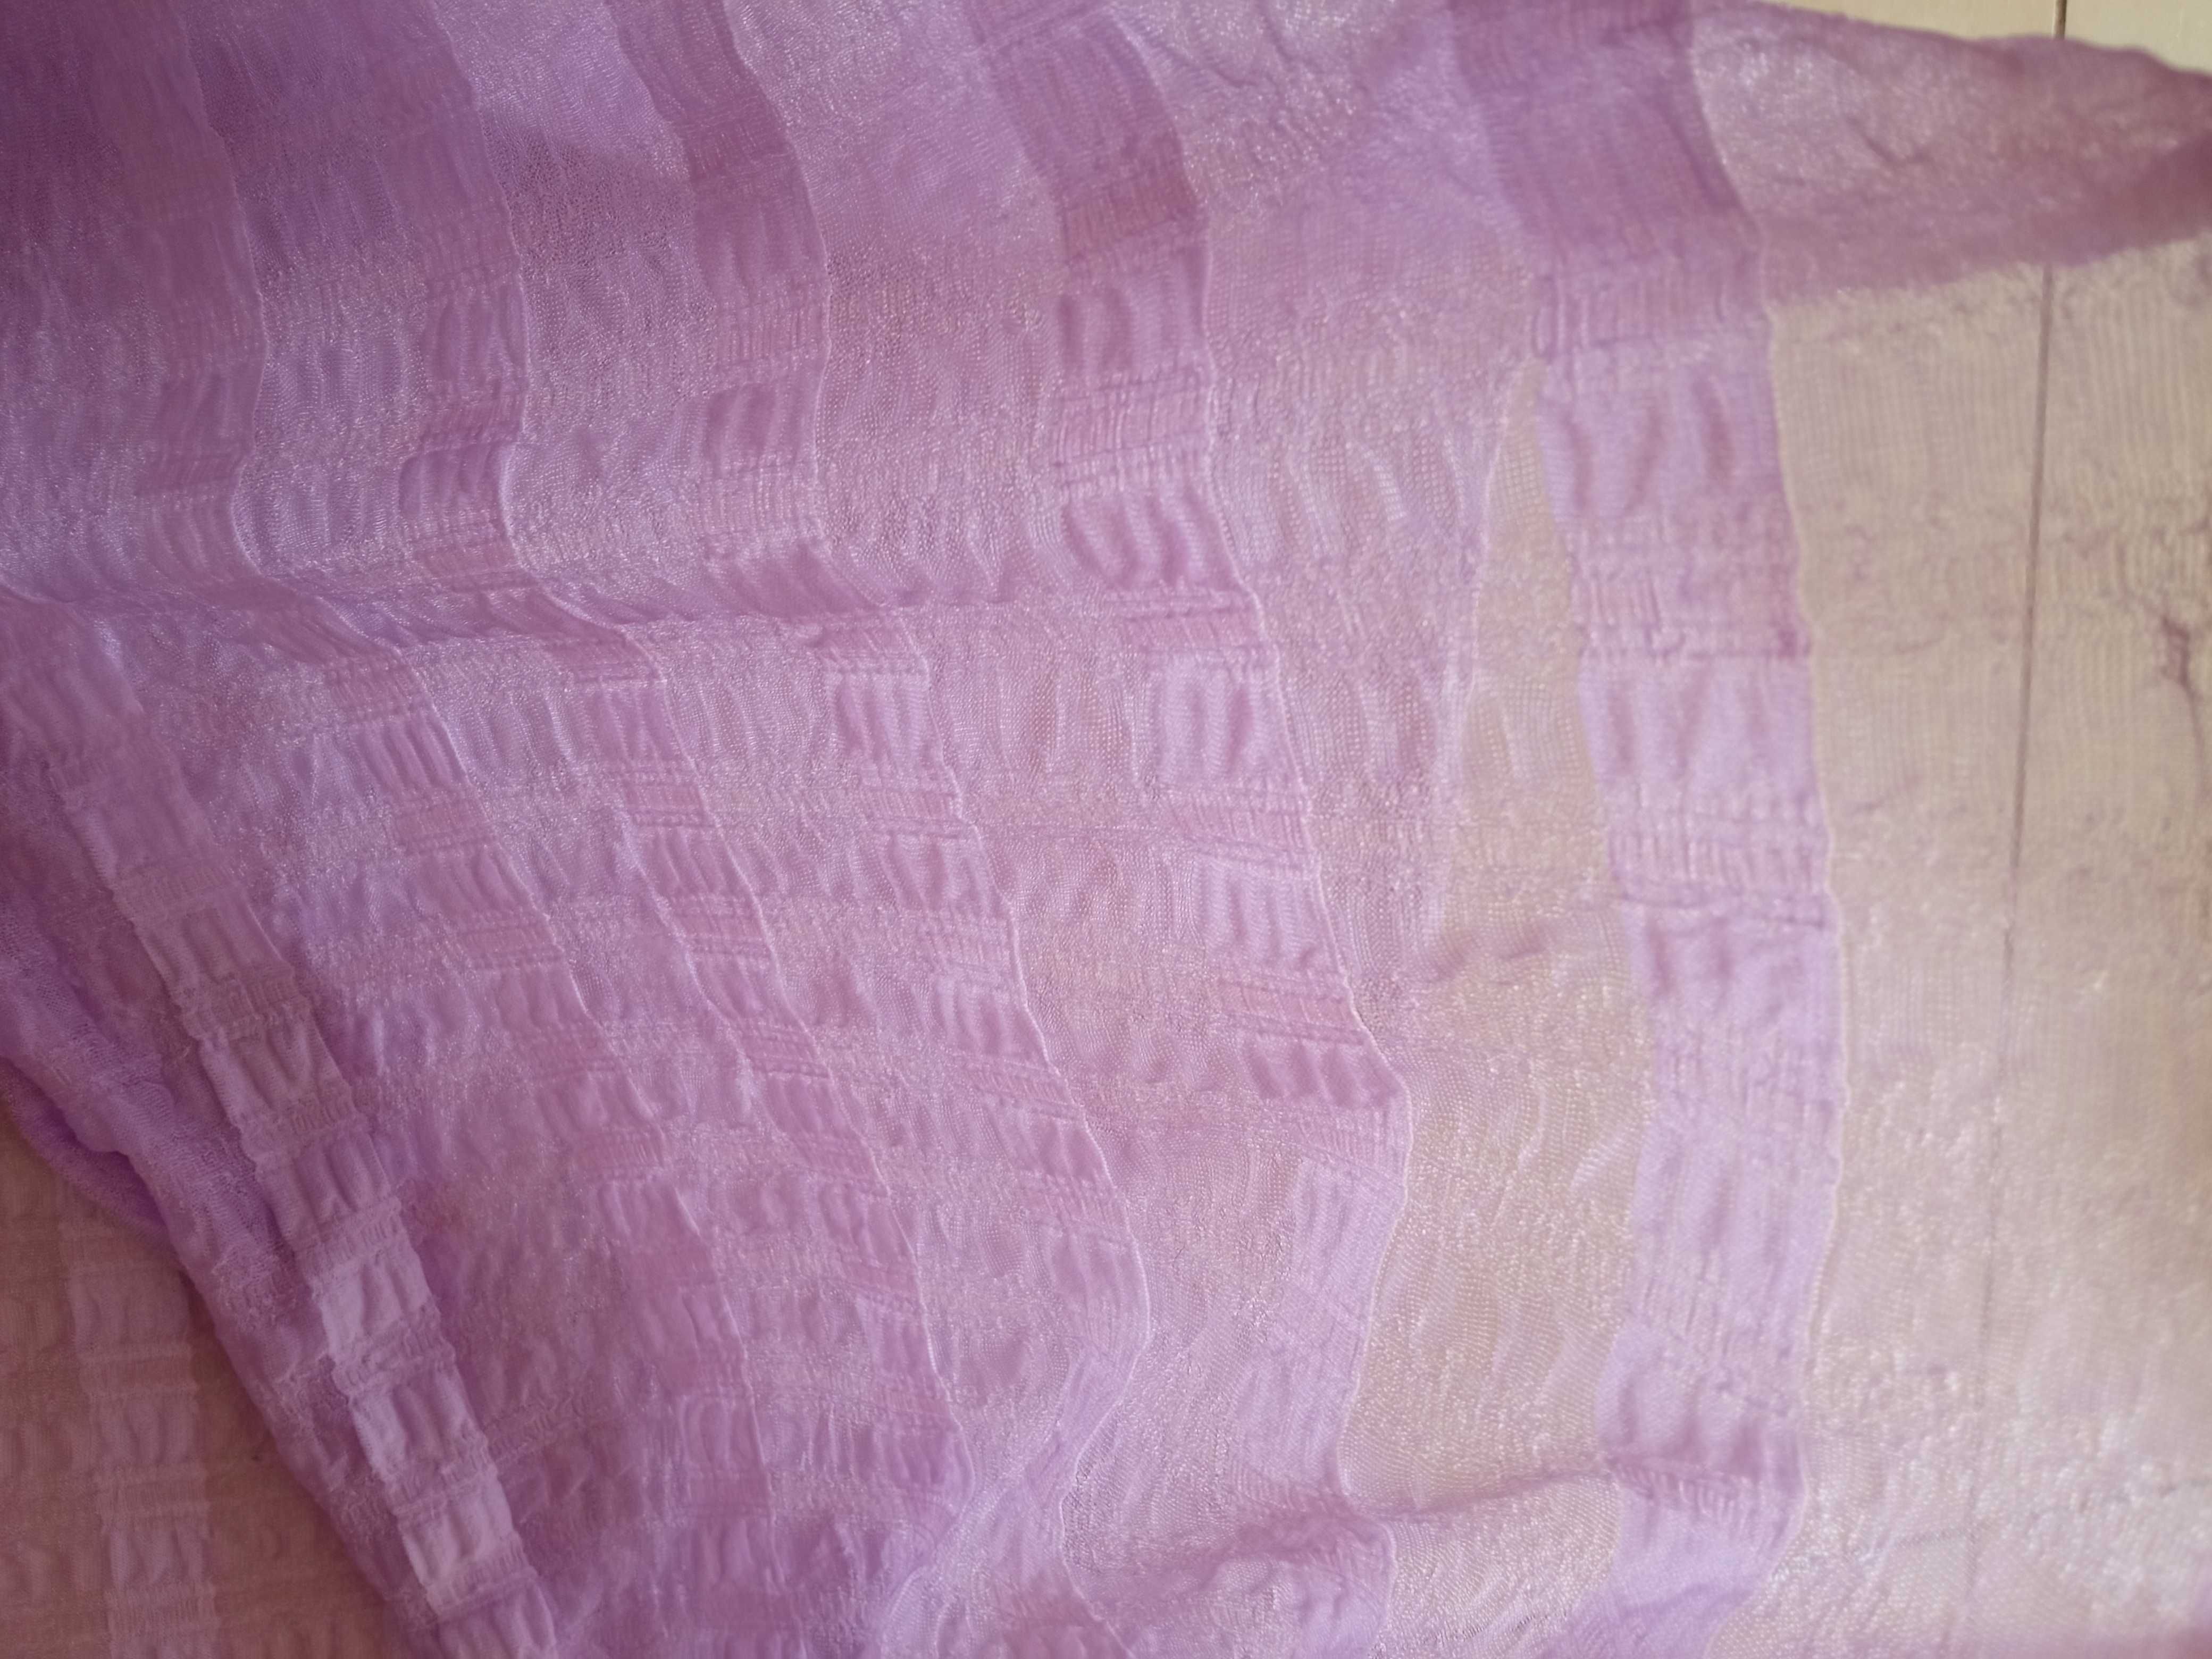 Damski szal fioletowy chusta elegancka fioletowa w paski 170 x 45